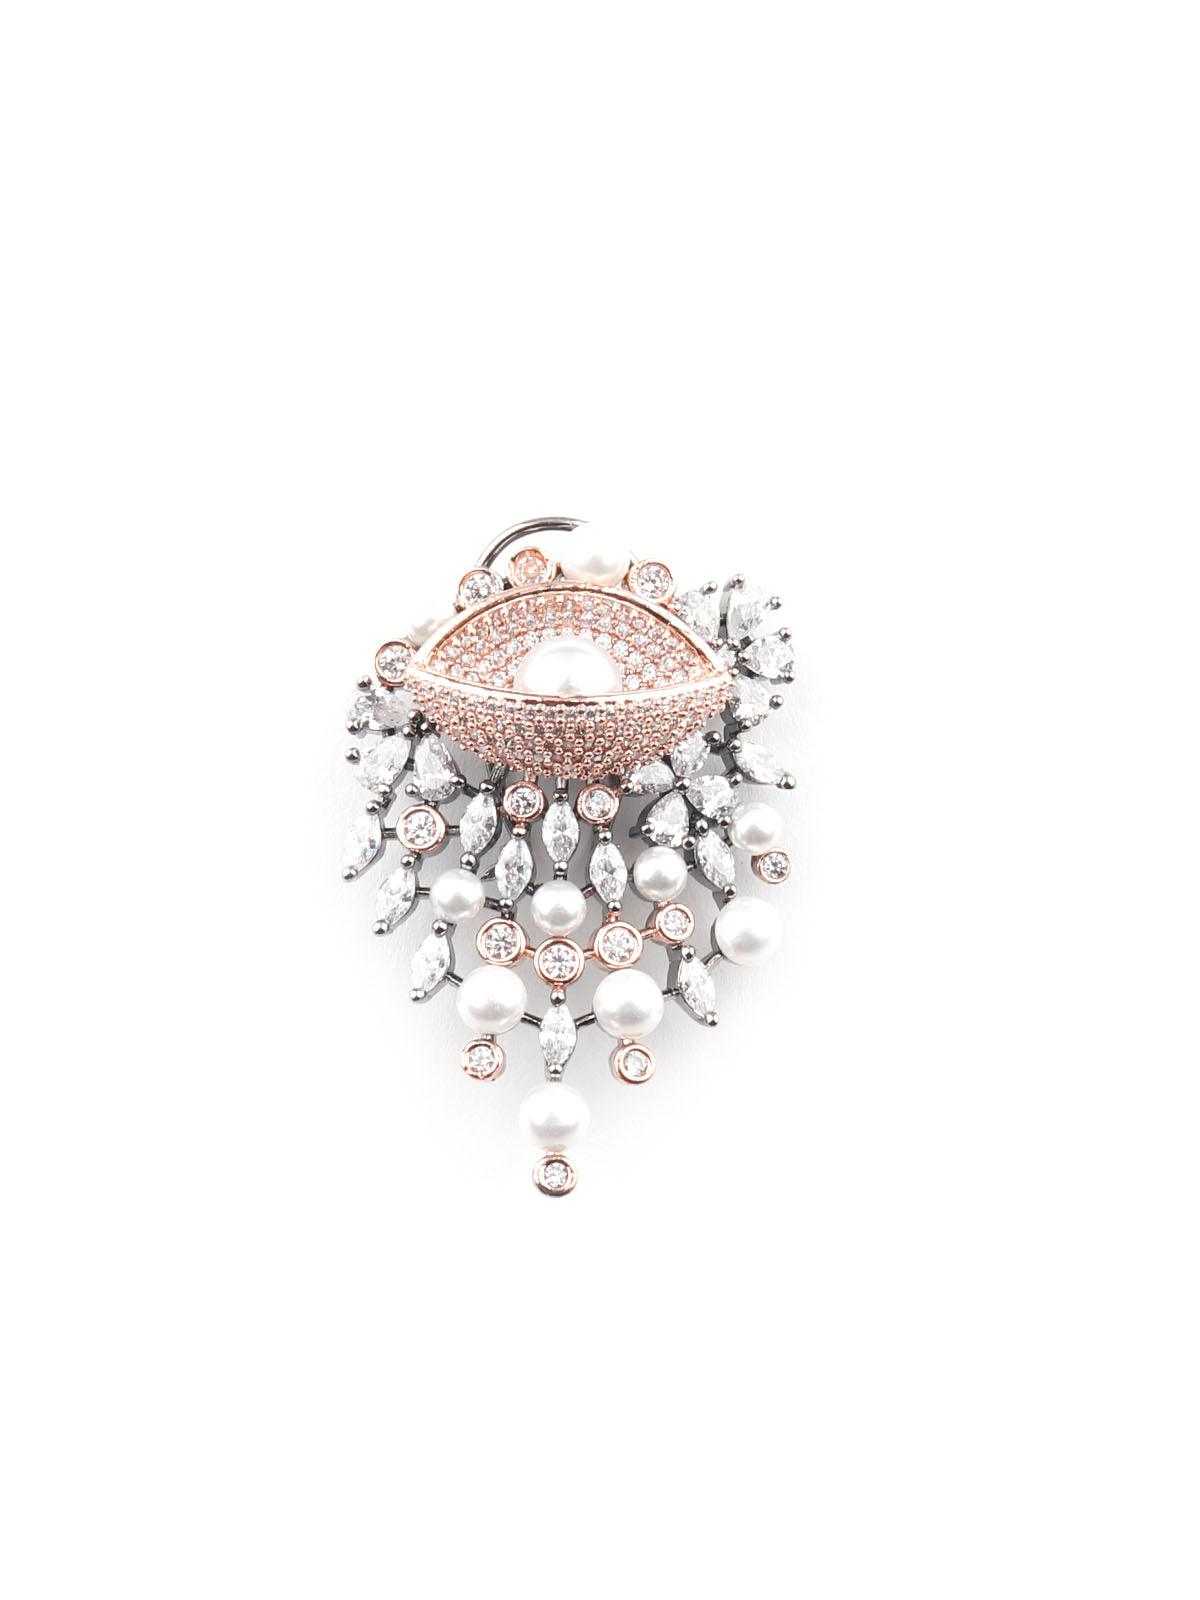 Gorgeous rose gold embellished earrings - Odette